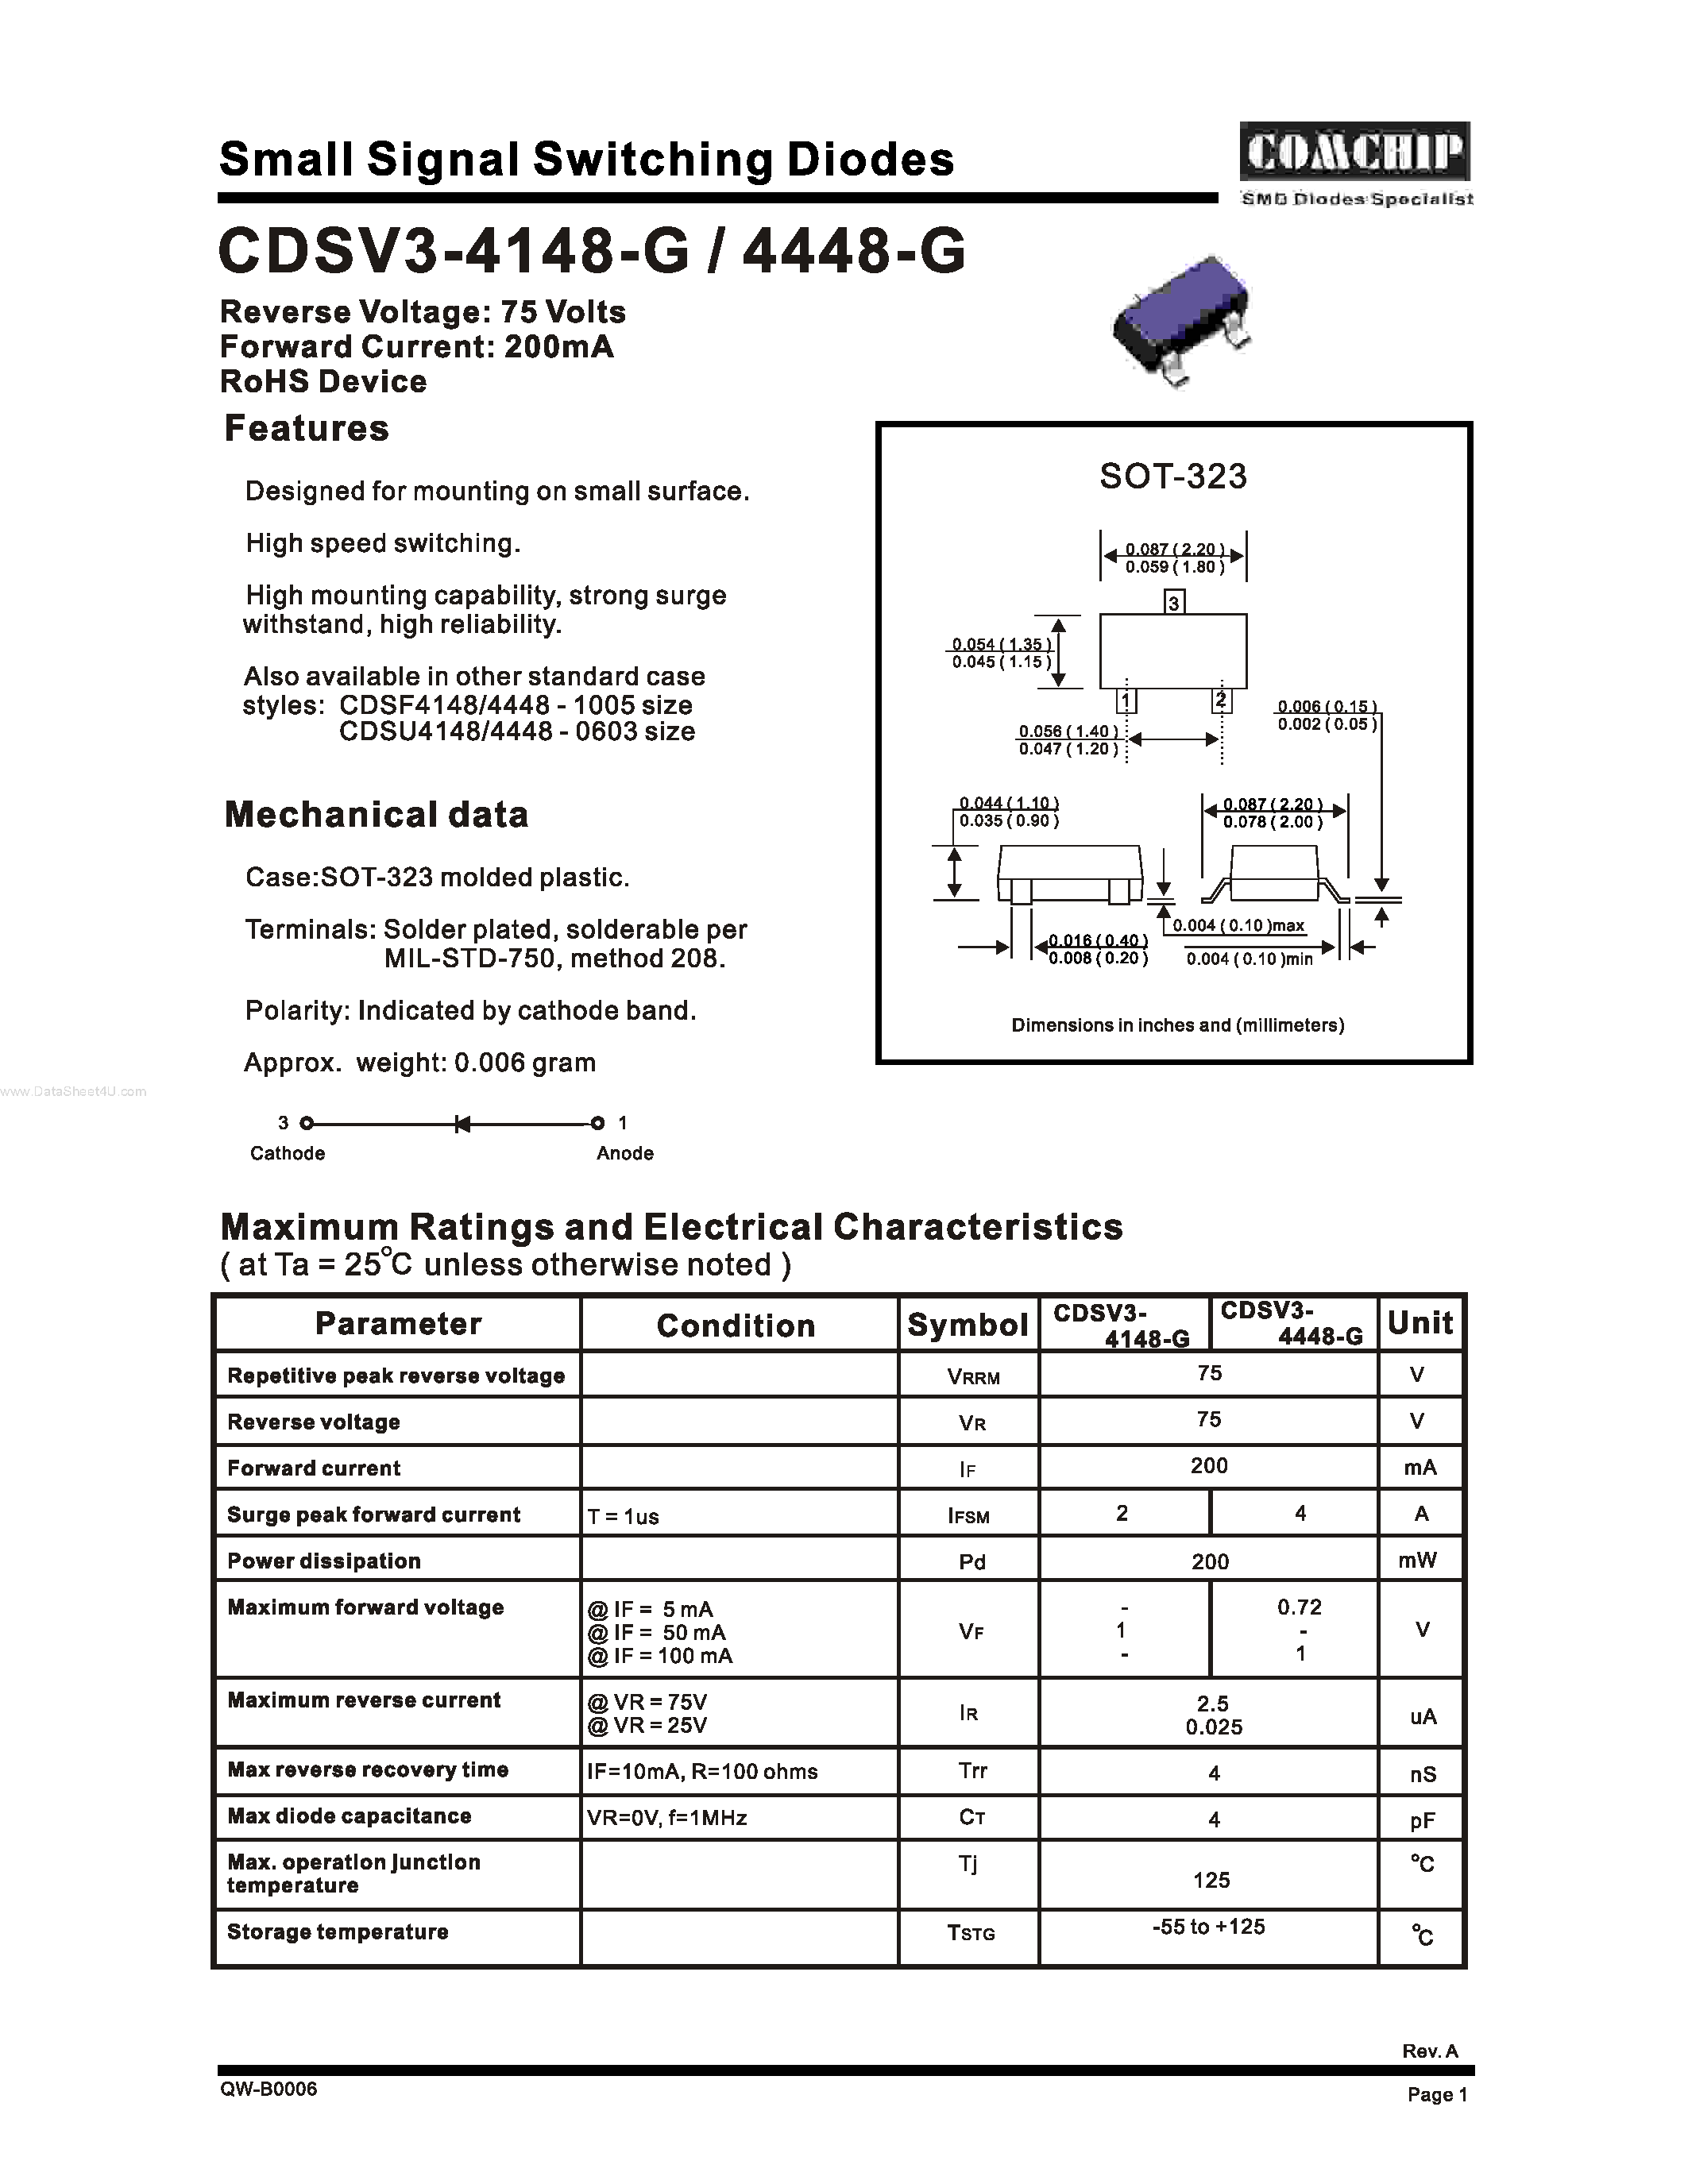 Даташит CDSV3-4148-G - (CDSV3-4448-G / CDSV3-4148-G) Small-Signal Switching Diode страница 1